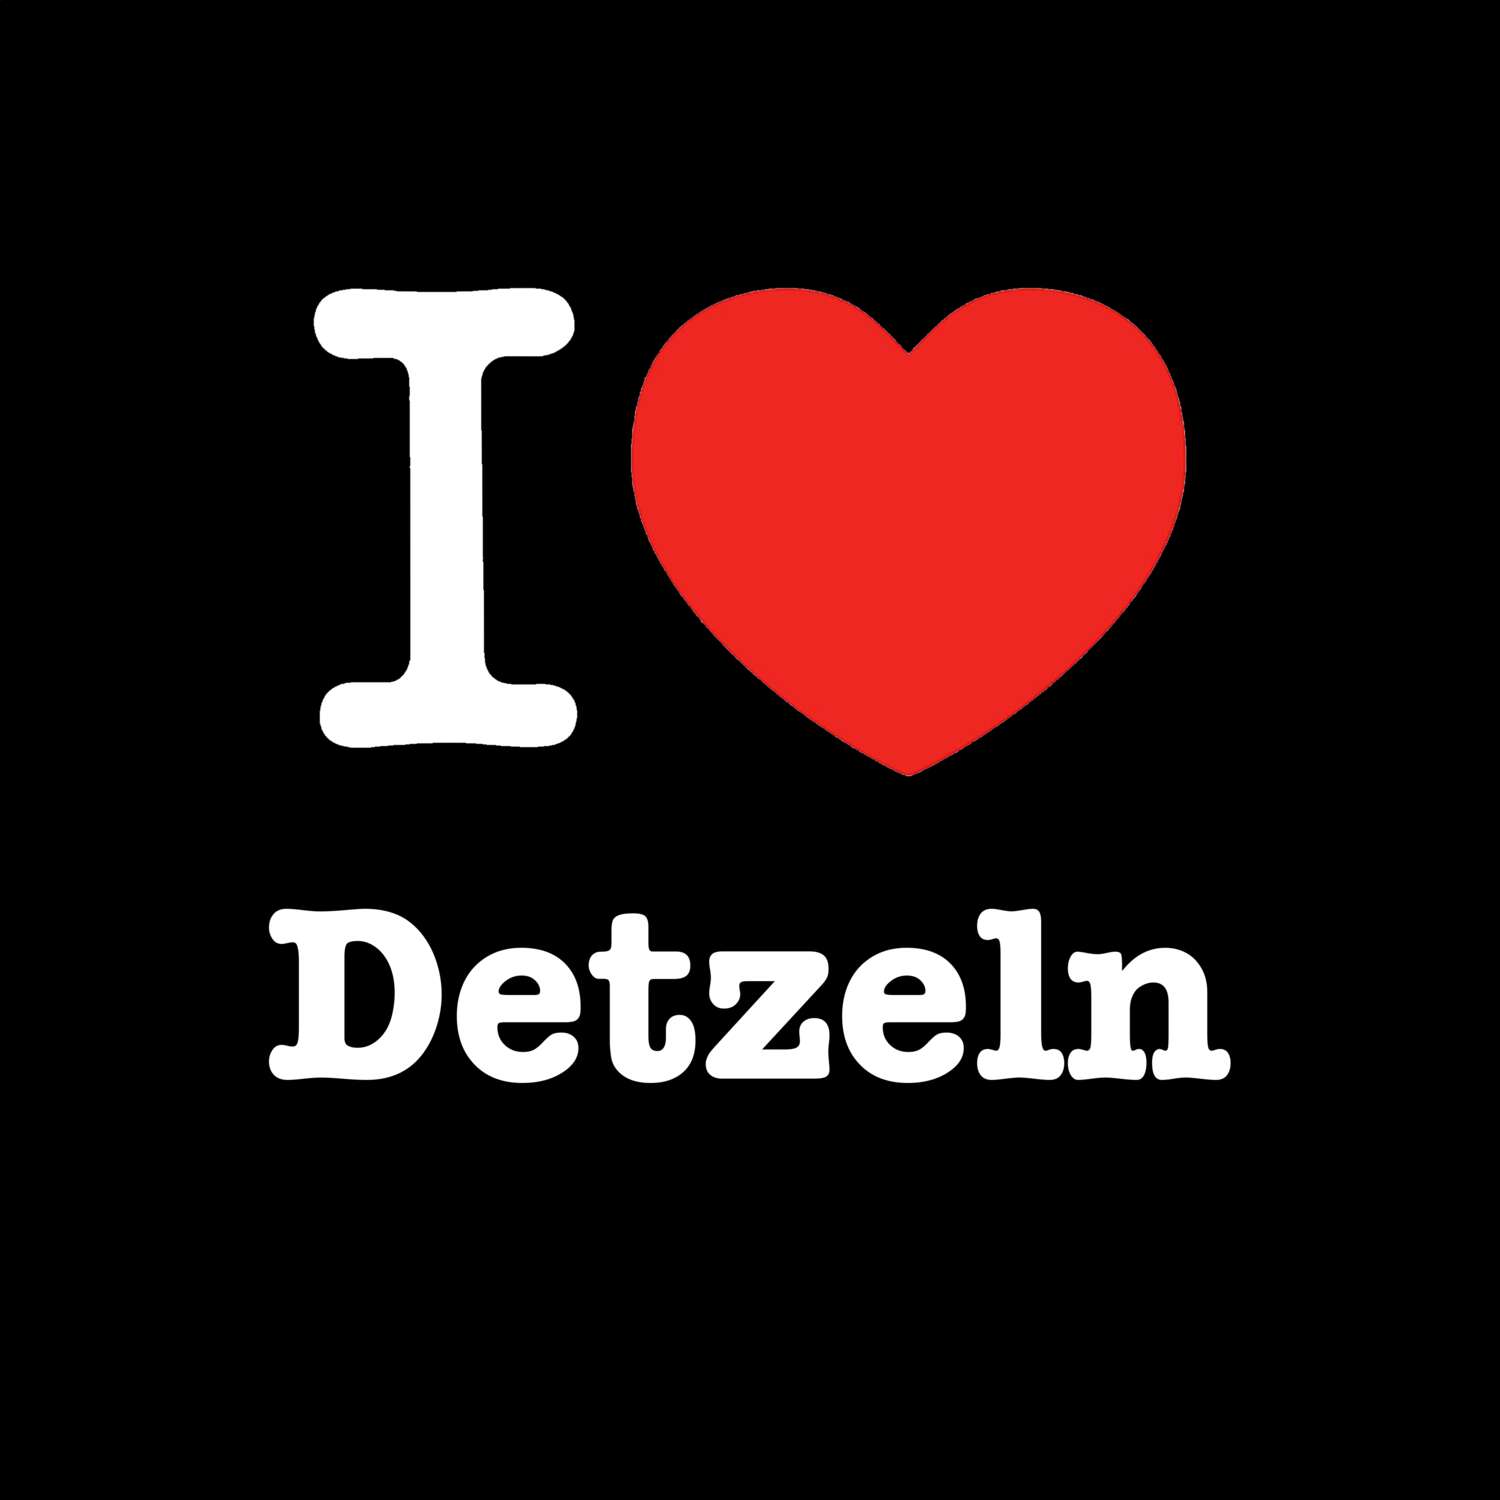 Detzeln T-Shirt »I love«